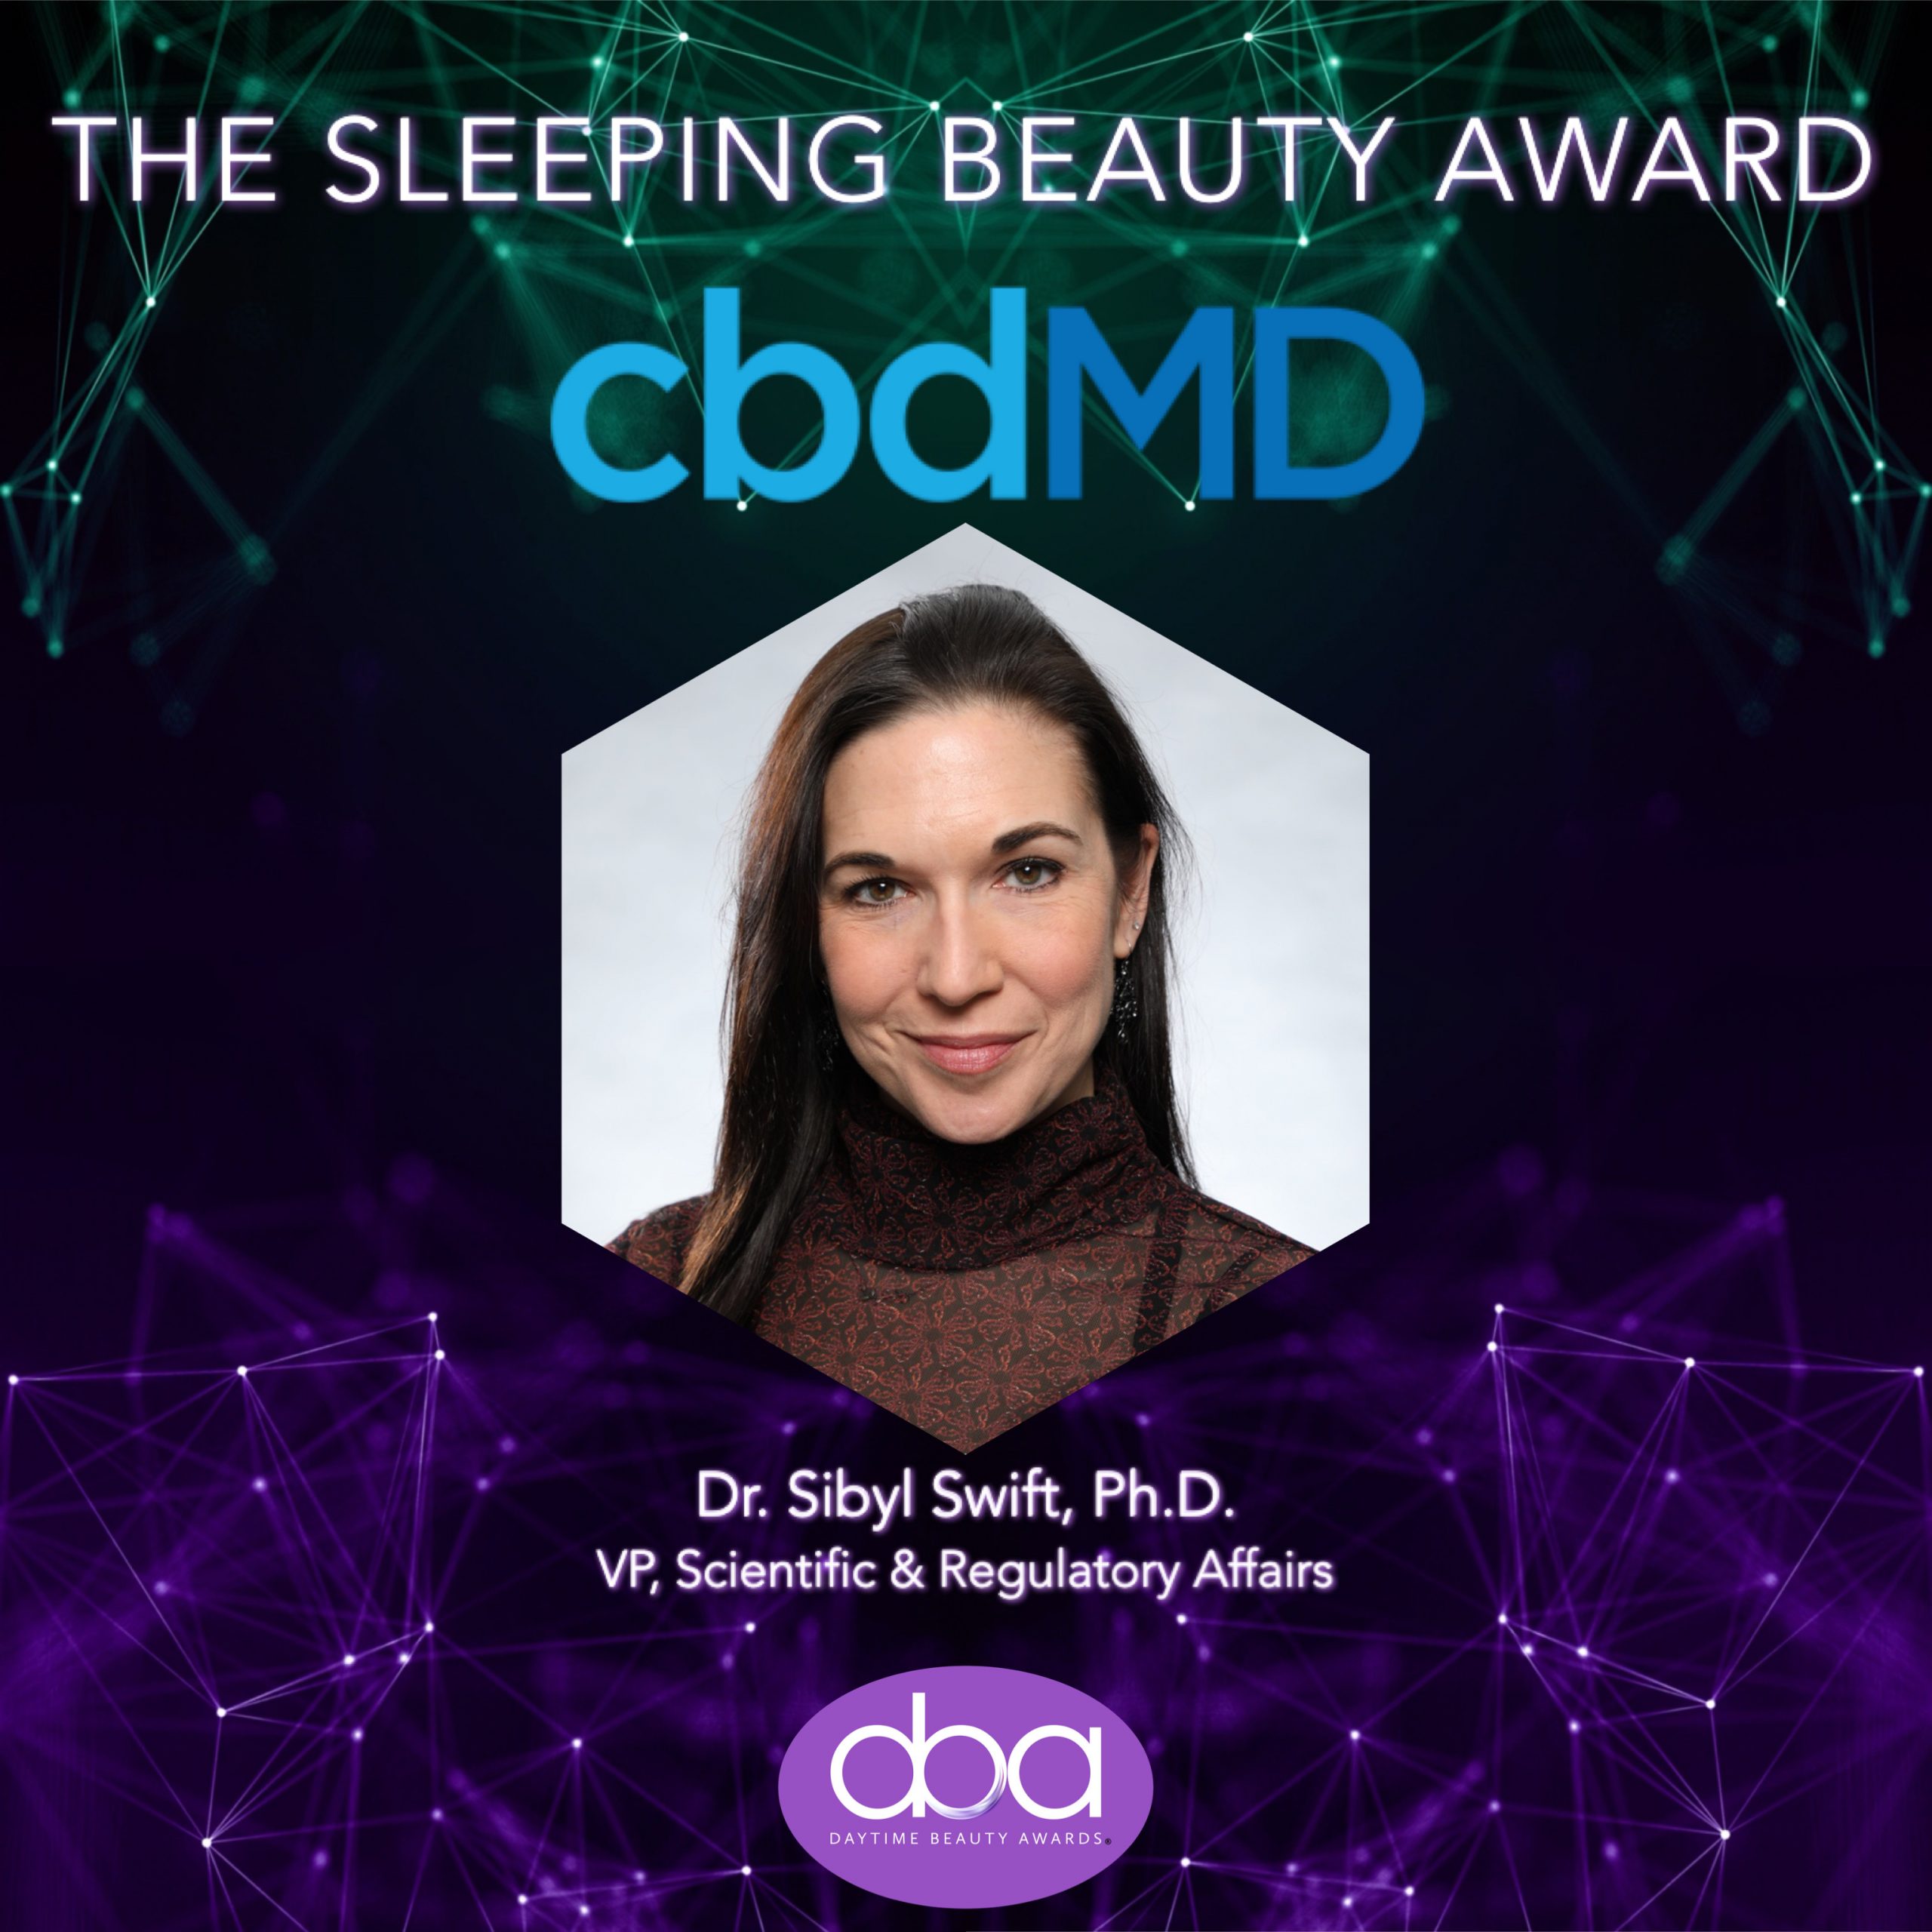 cbdmd, daytime beauty awards, dr. sibyl swift